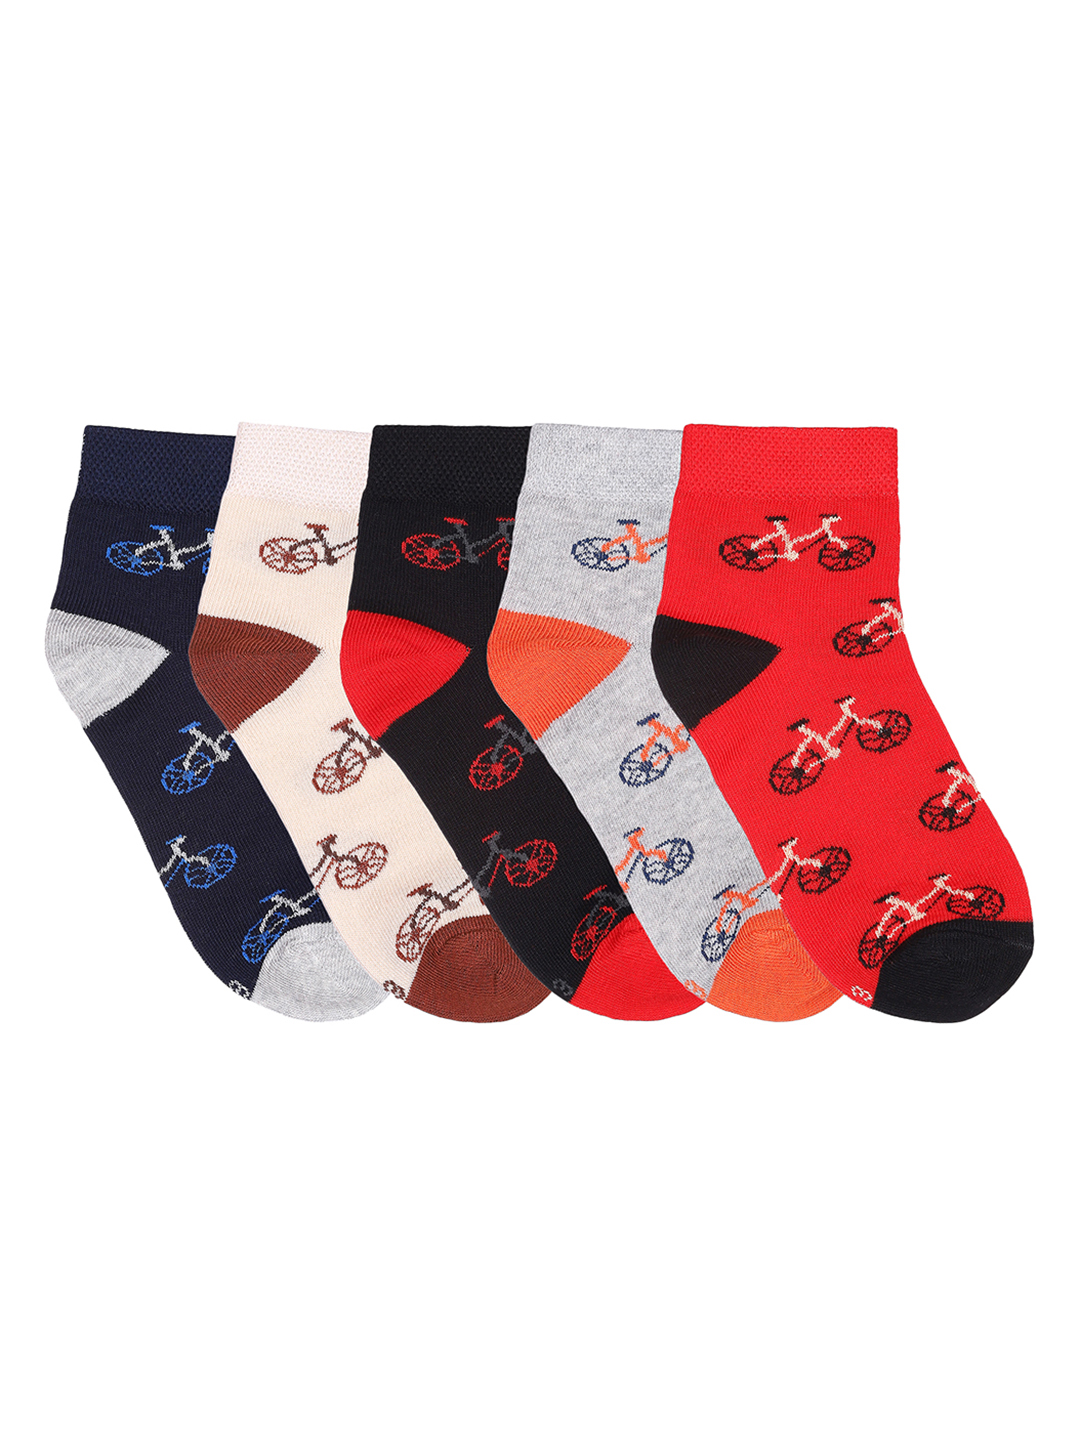 Kids Allover Design Cotton Spandex Ankle Socks4